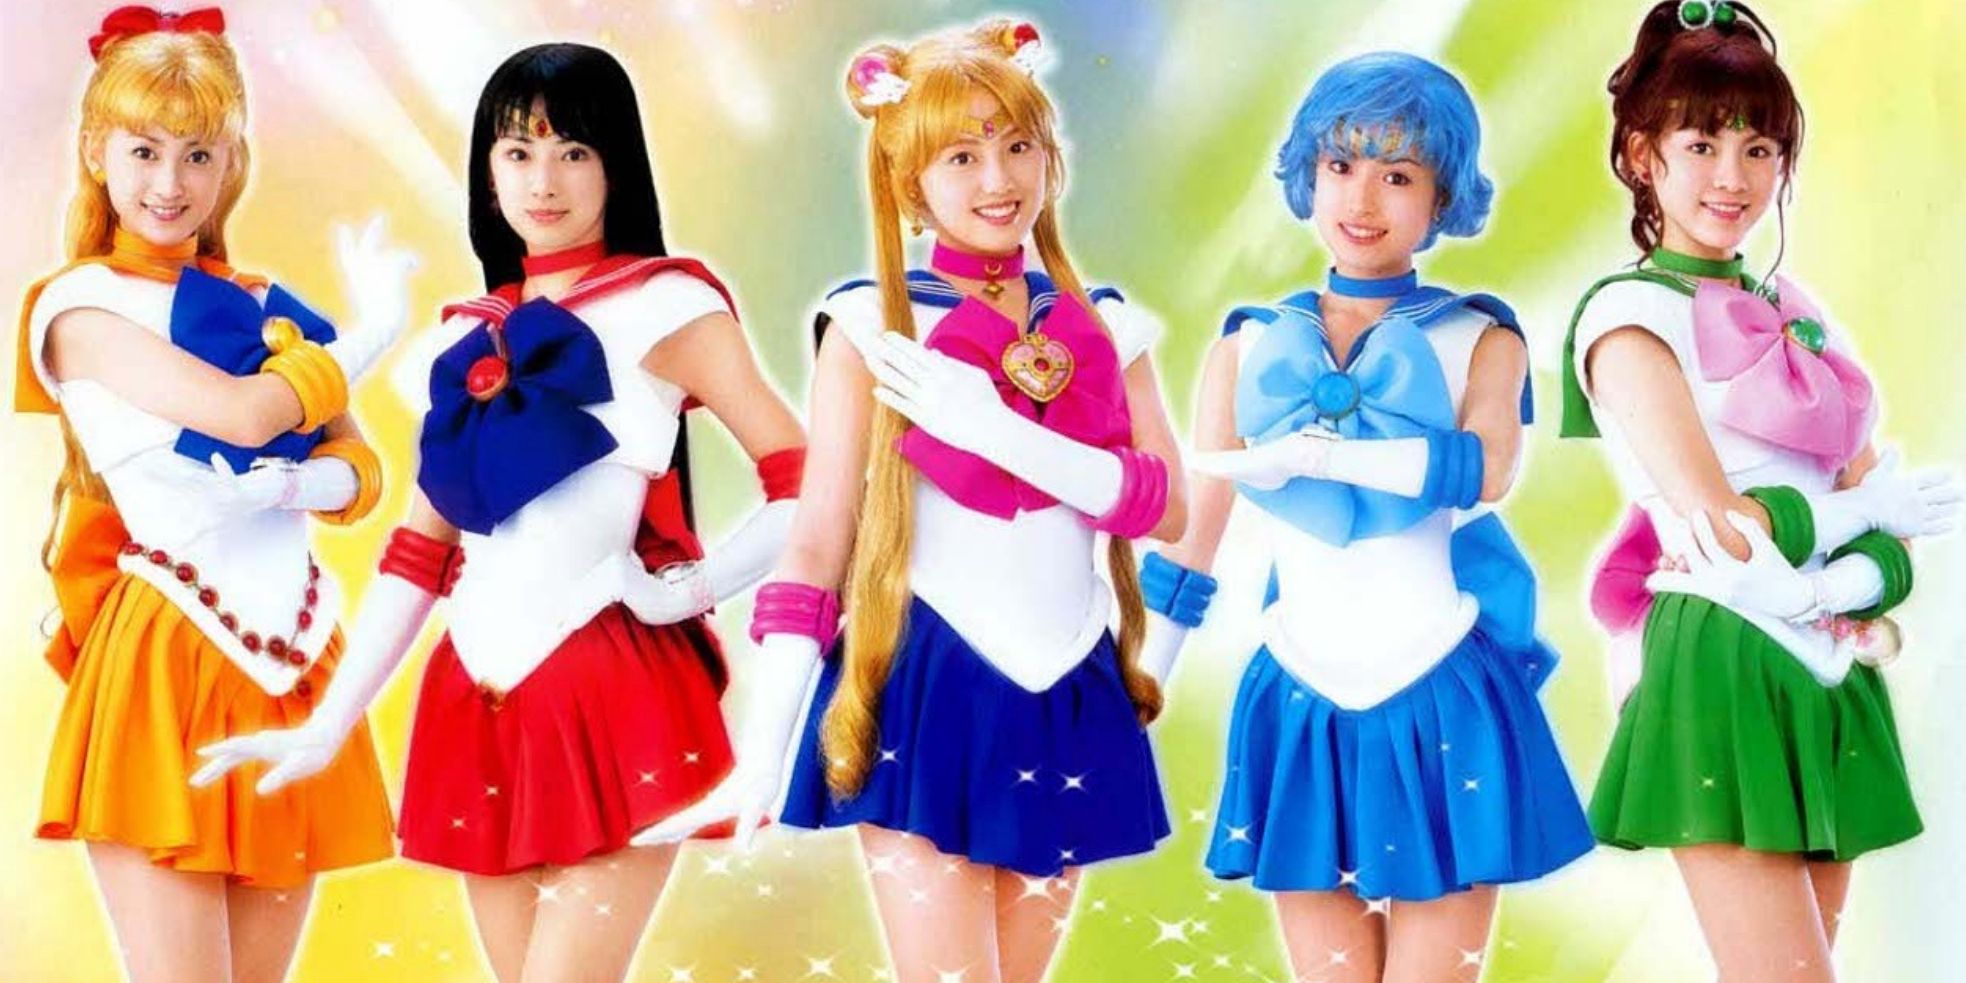 Sailor Moon 10 Questions About Usagi Tsukino Answered